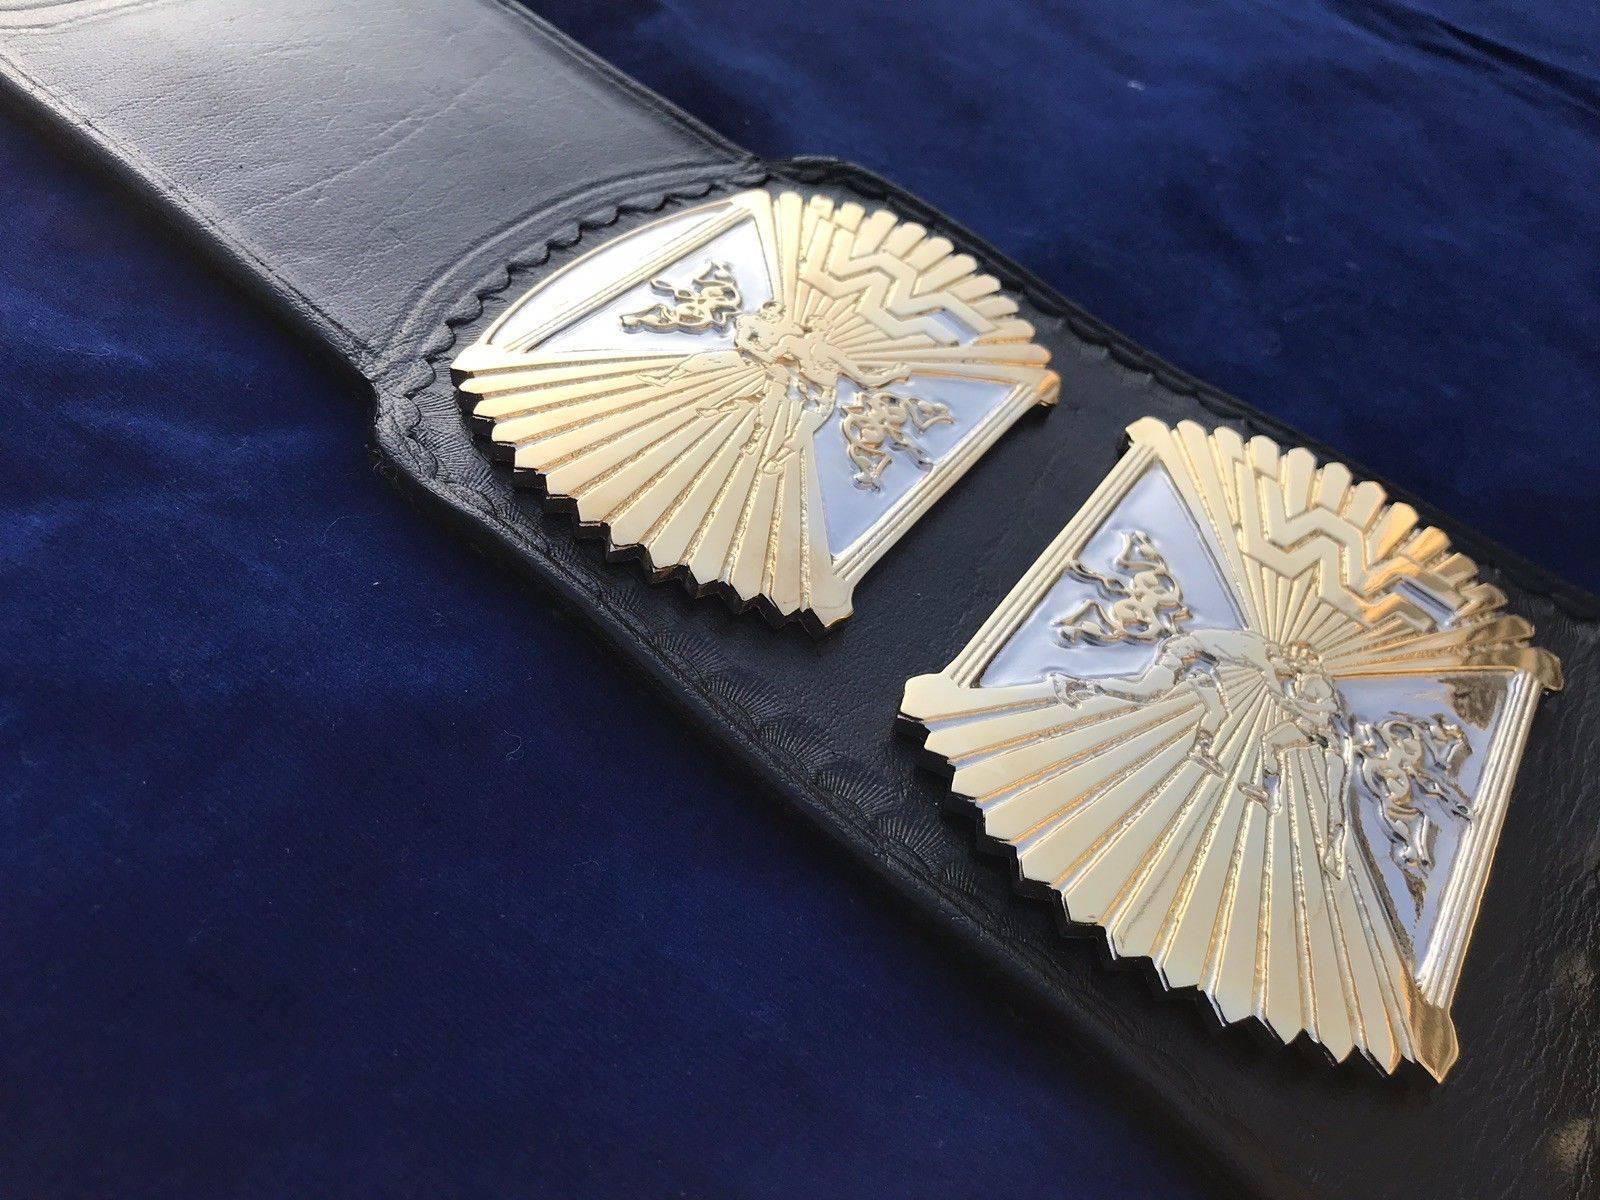 WWF WINGED EAGLE DUAL PLATED 24K GOLD Zinc Championship Belt